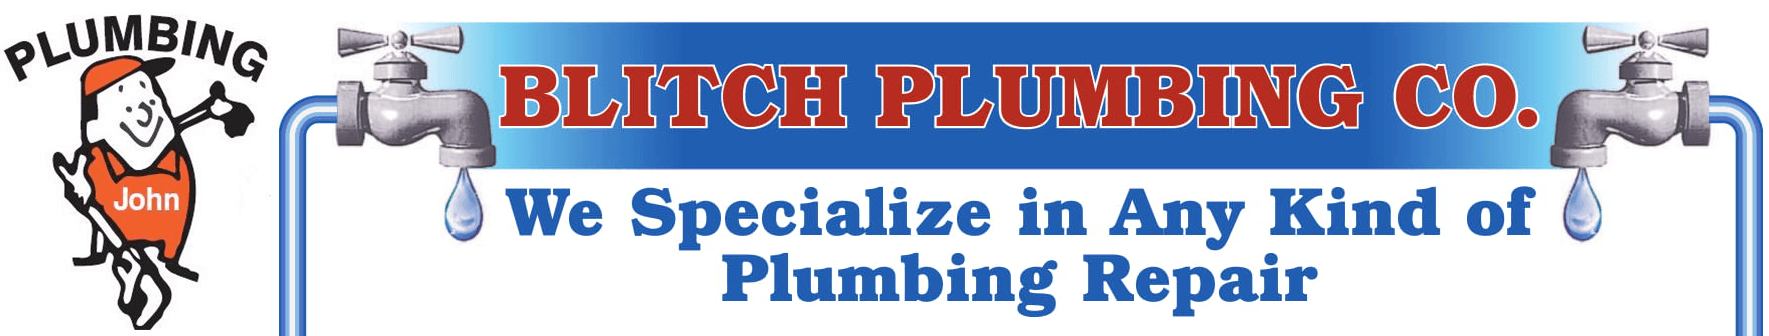 John Blitch Plumbing Company, Inc.